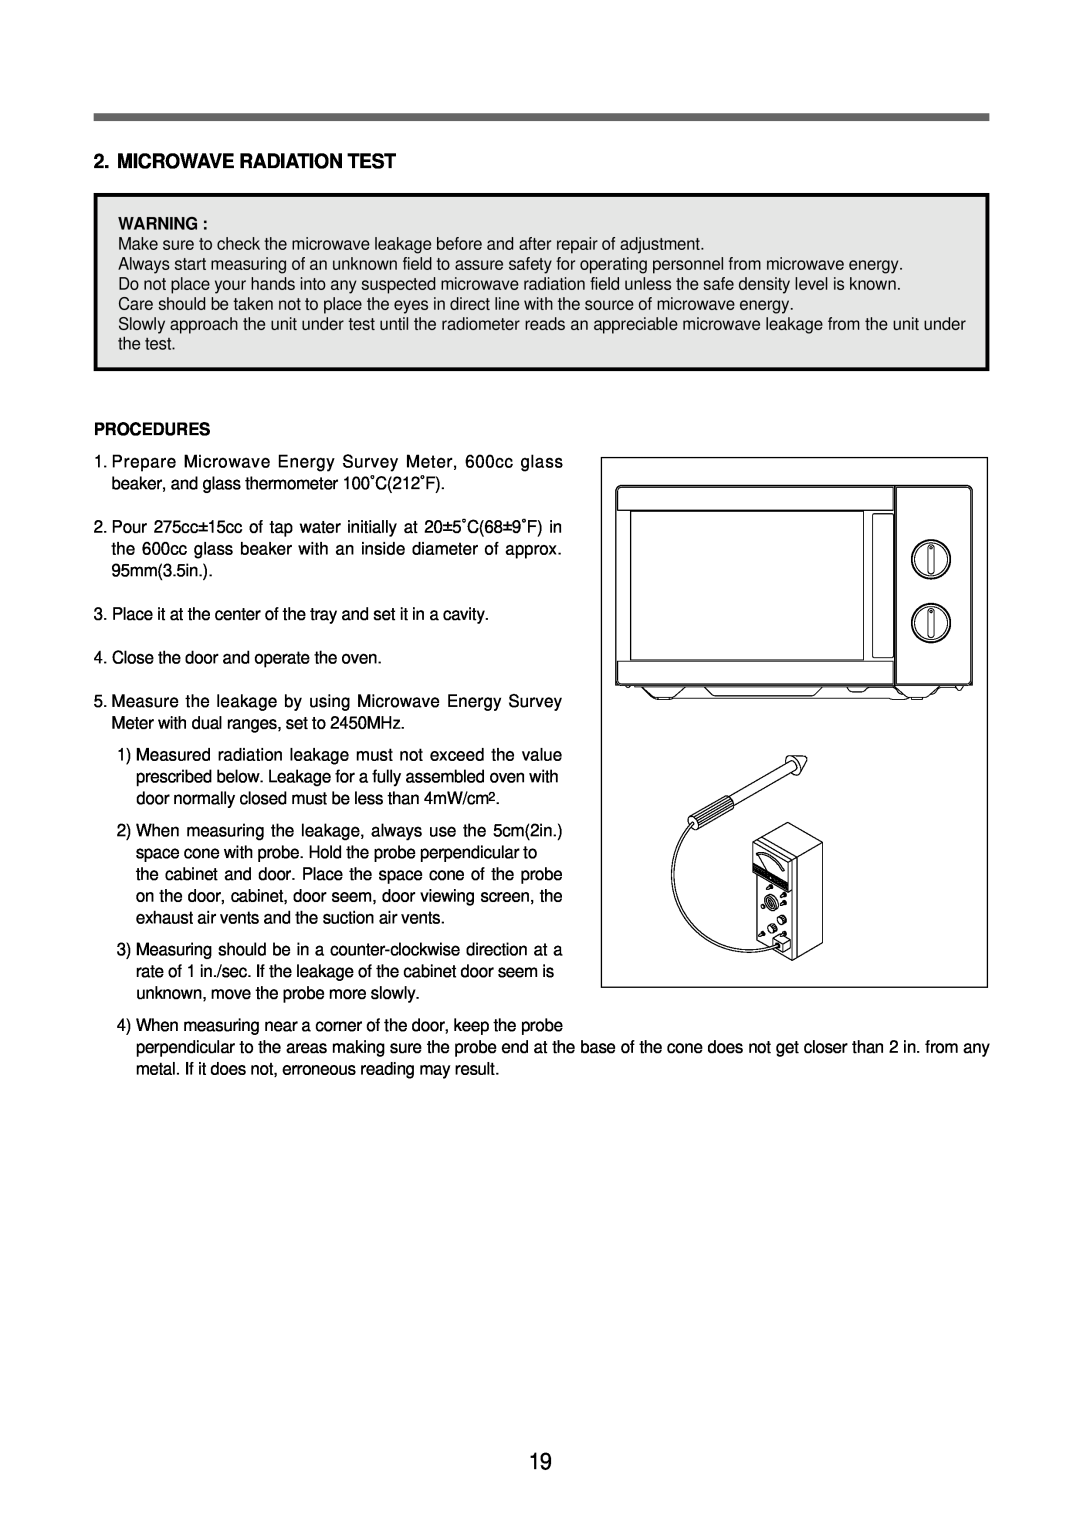 Daewoo Microwave Oven, KOR-6N575S service manual Microwave Radiation Test, Procedures 